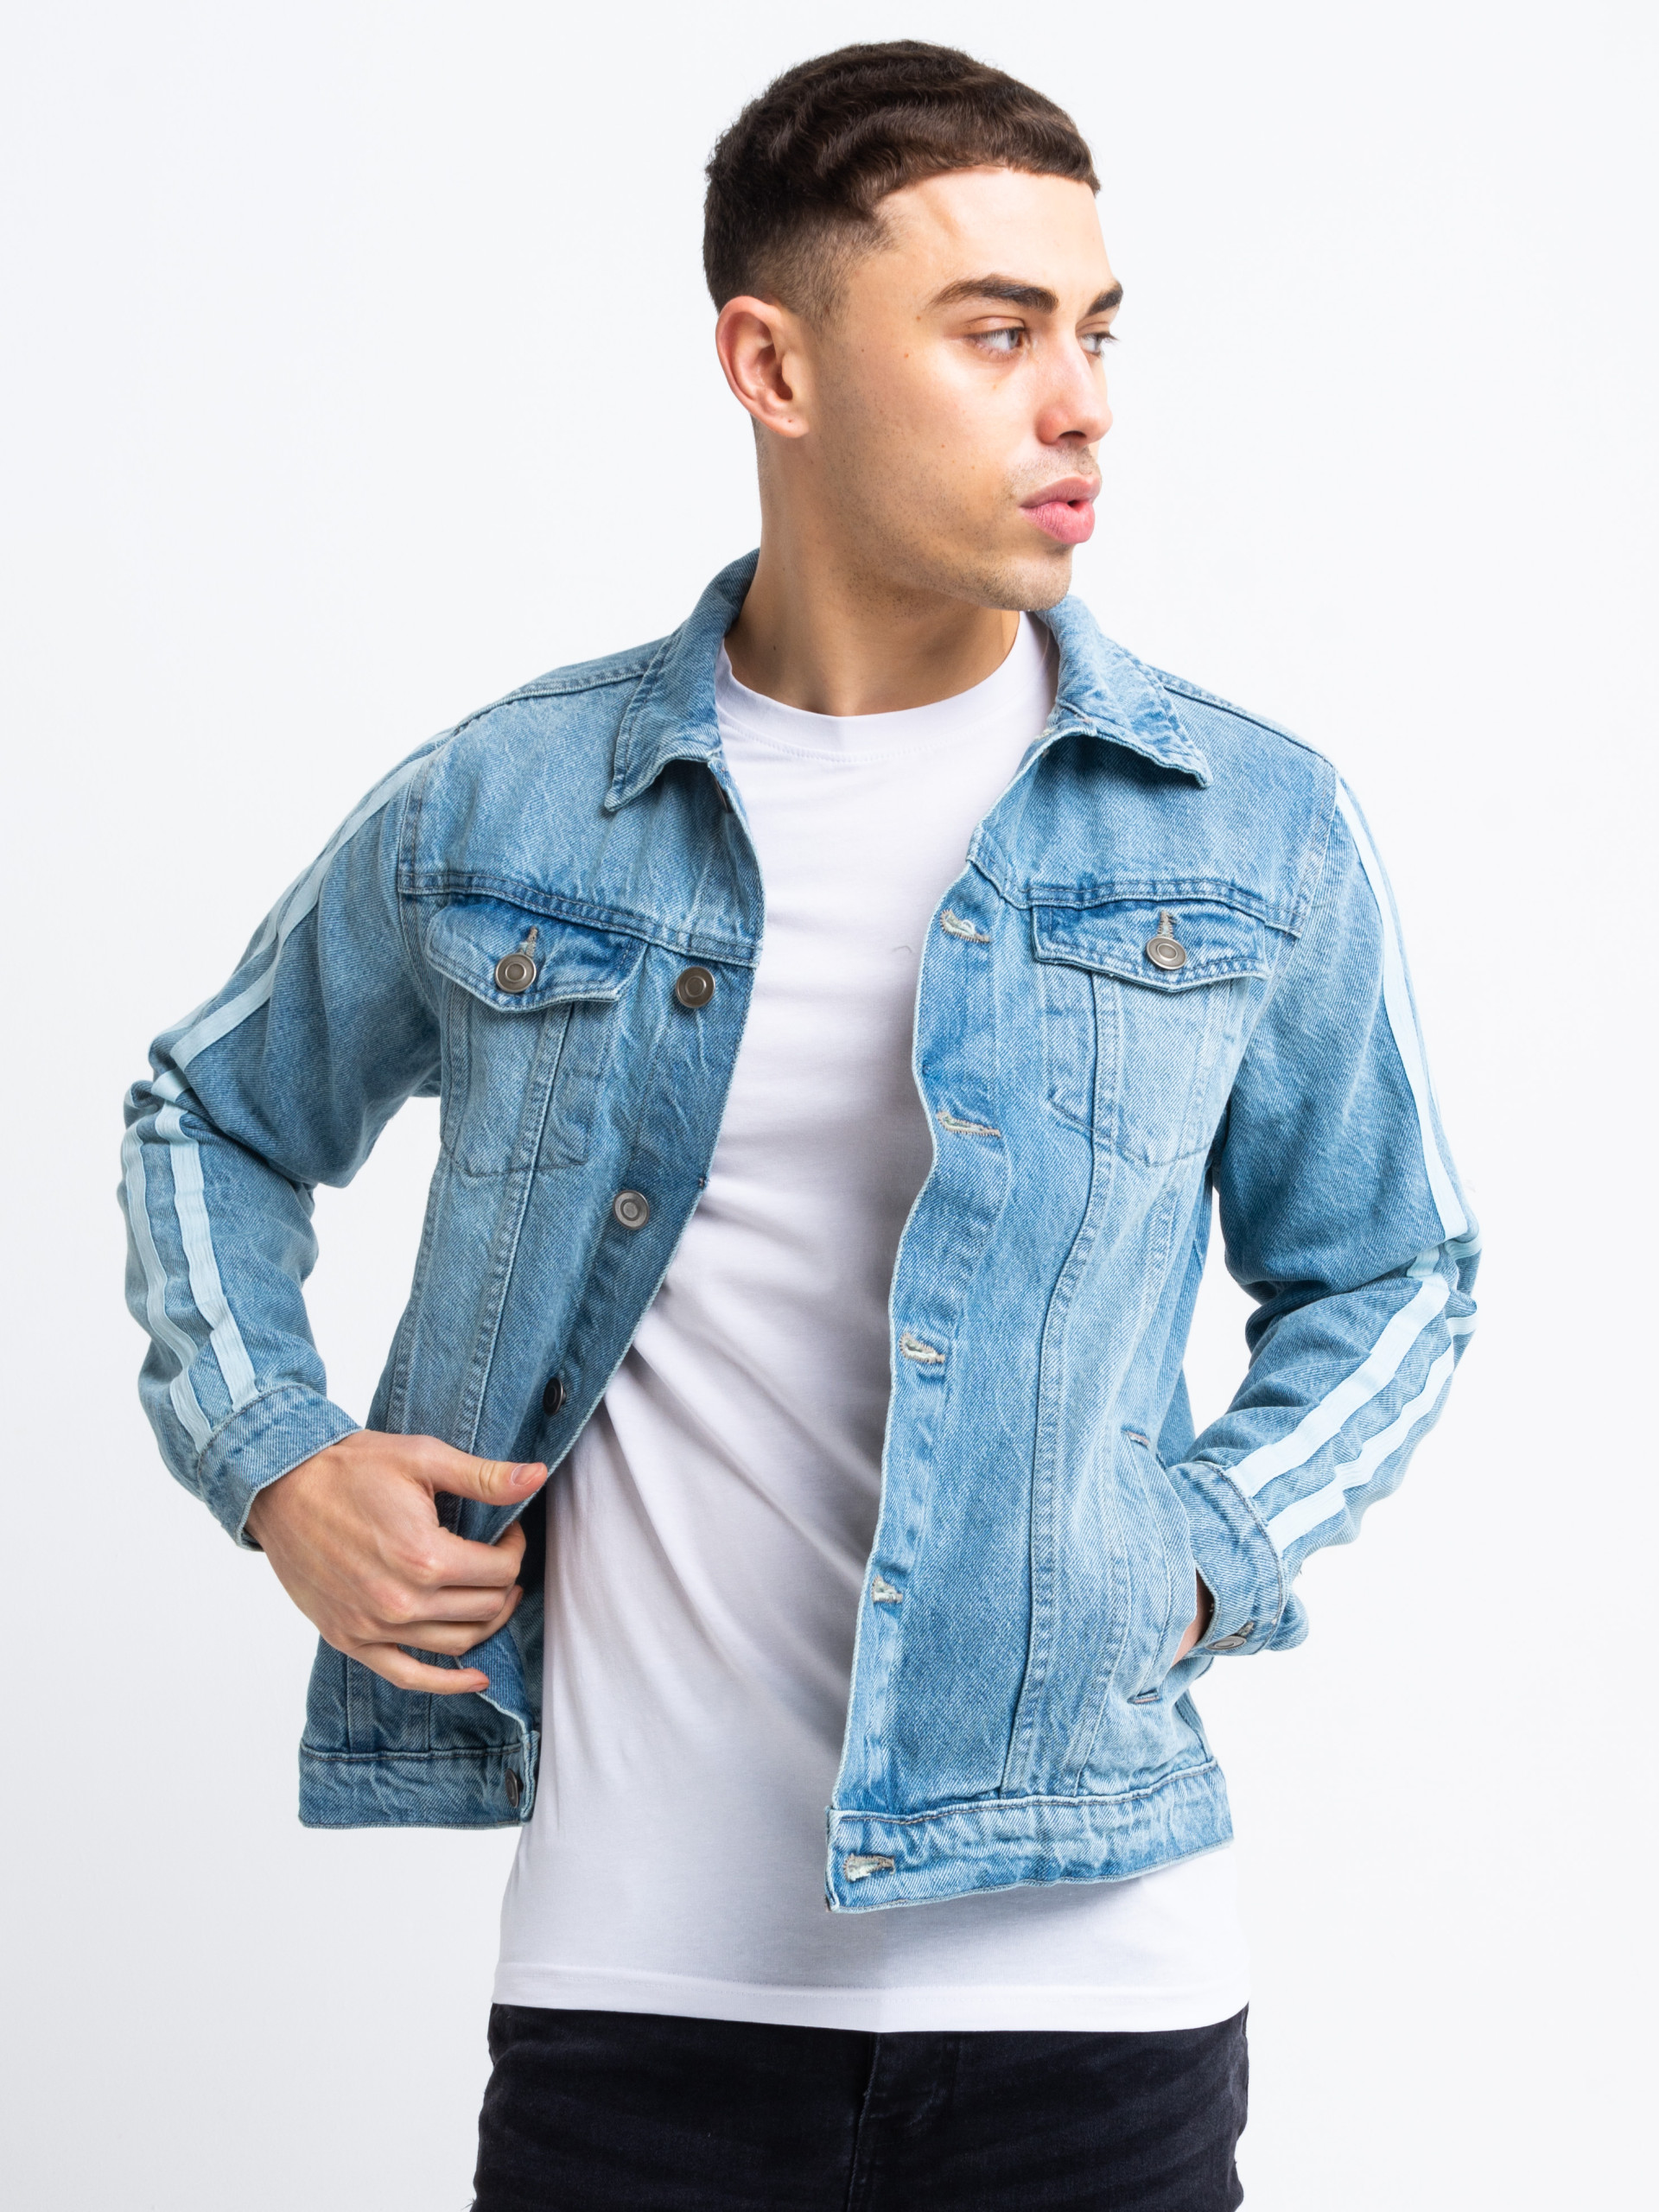 Light Blue white Stripe Denim Jacket | Men's Clothing & Fashion | HisColumn